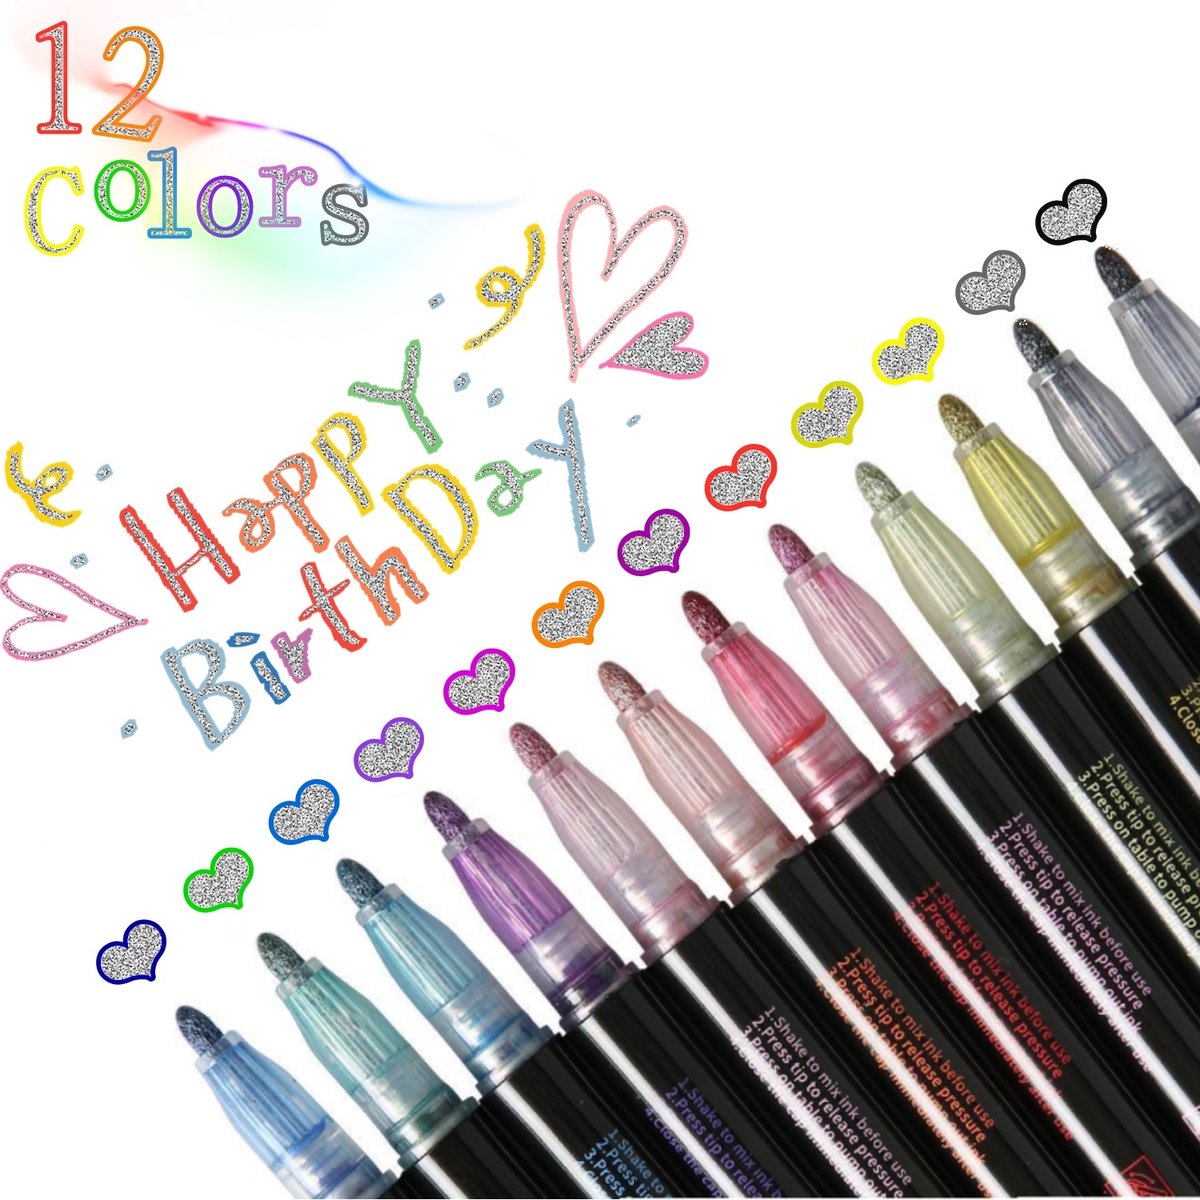 Glitterstiften 12 kleuren - Glitterpennen - Metallic Outline Markers Pennen